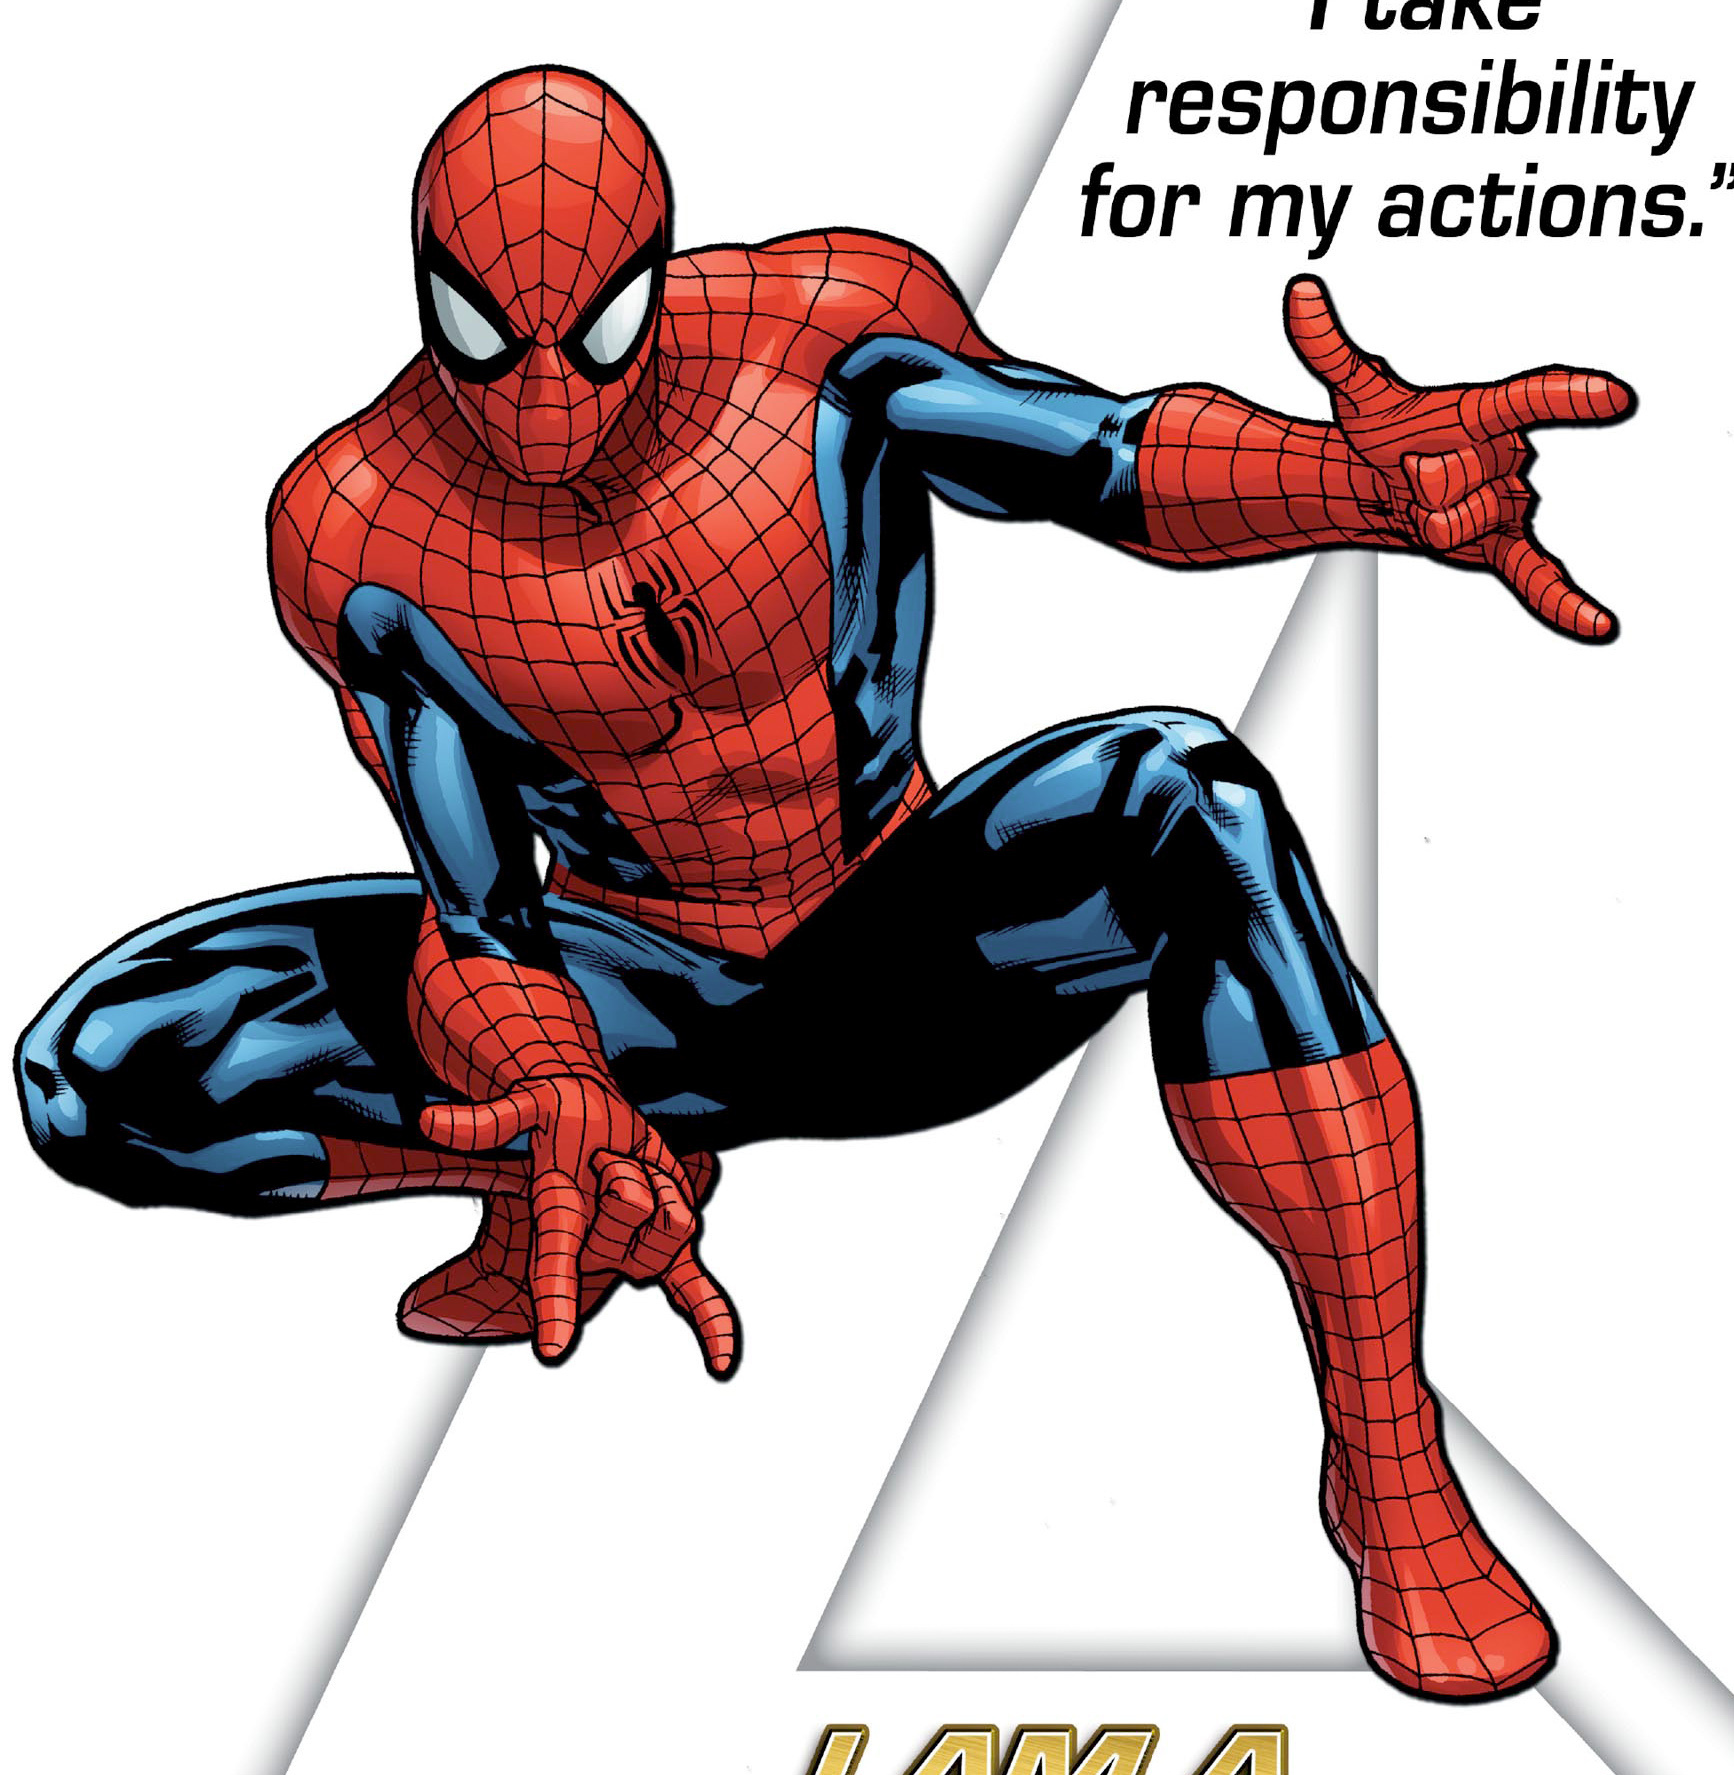 Spider-Man - Gallery Colection